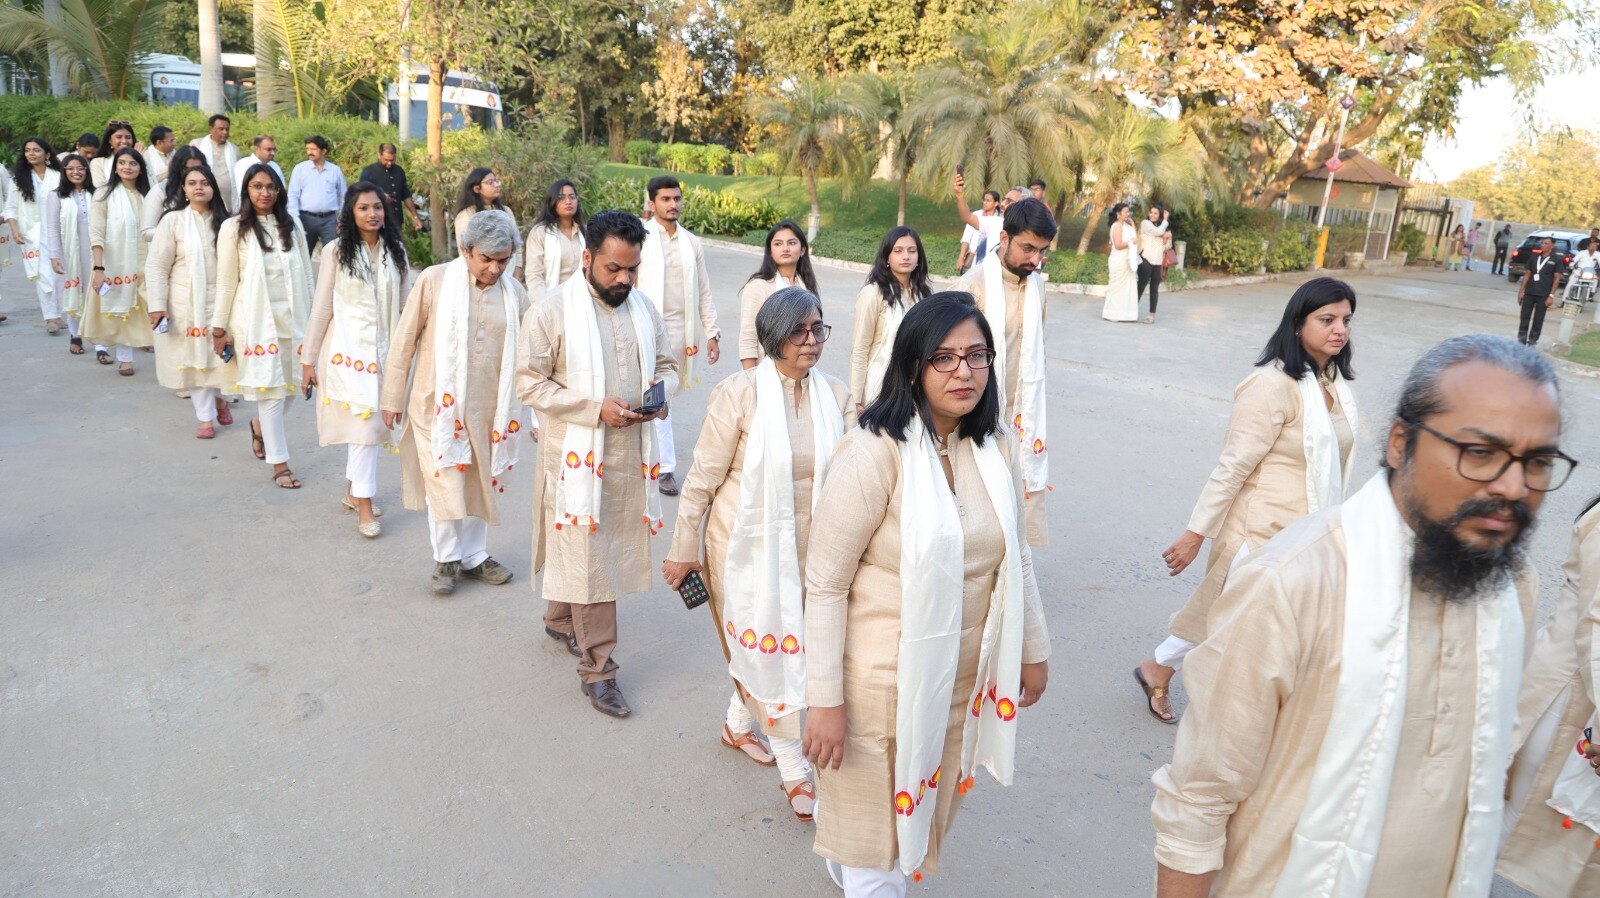 Karnavati University Convocation: કર્ણાવતી યુનિવર્સિટીનો ત્રીજો પદવીદાન સમારંભ યોજાયો, 863 વિદ્યાર્થીઓને ડિગ્રી એનાયત કરવામાં આવી